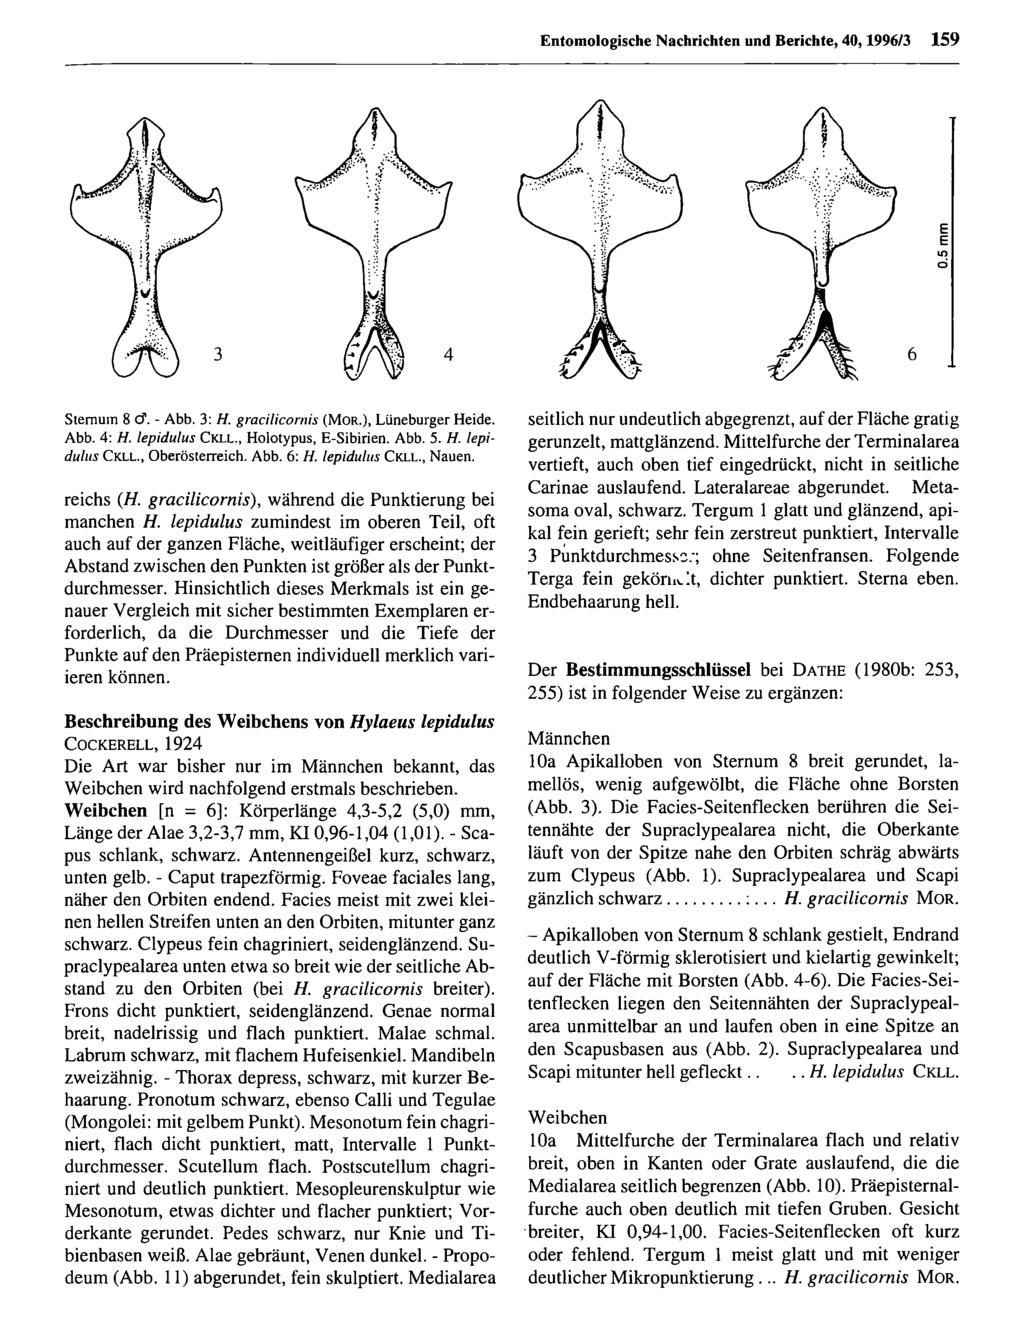 Nachrichten und Berichte, 40,1996/3 159 Stem um 8 Cf. - Abb. 3: H. gracilicornis (M o r.), Lüneburger Heide. Abb. 4: H. lepidulus C k l l., Holotypus, E-Sibirien. Abb. 5. H. lepidulus C k ll.